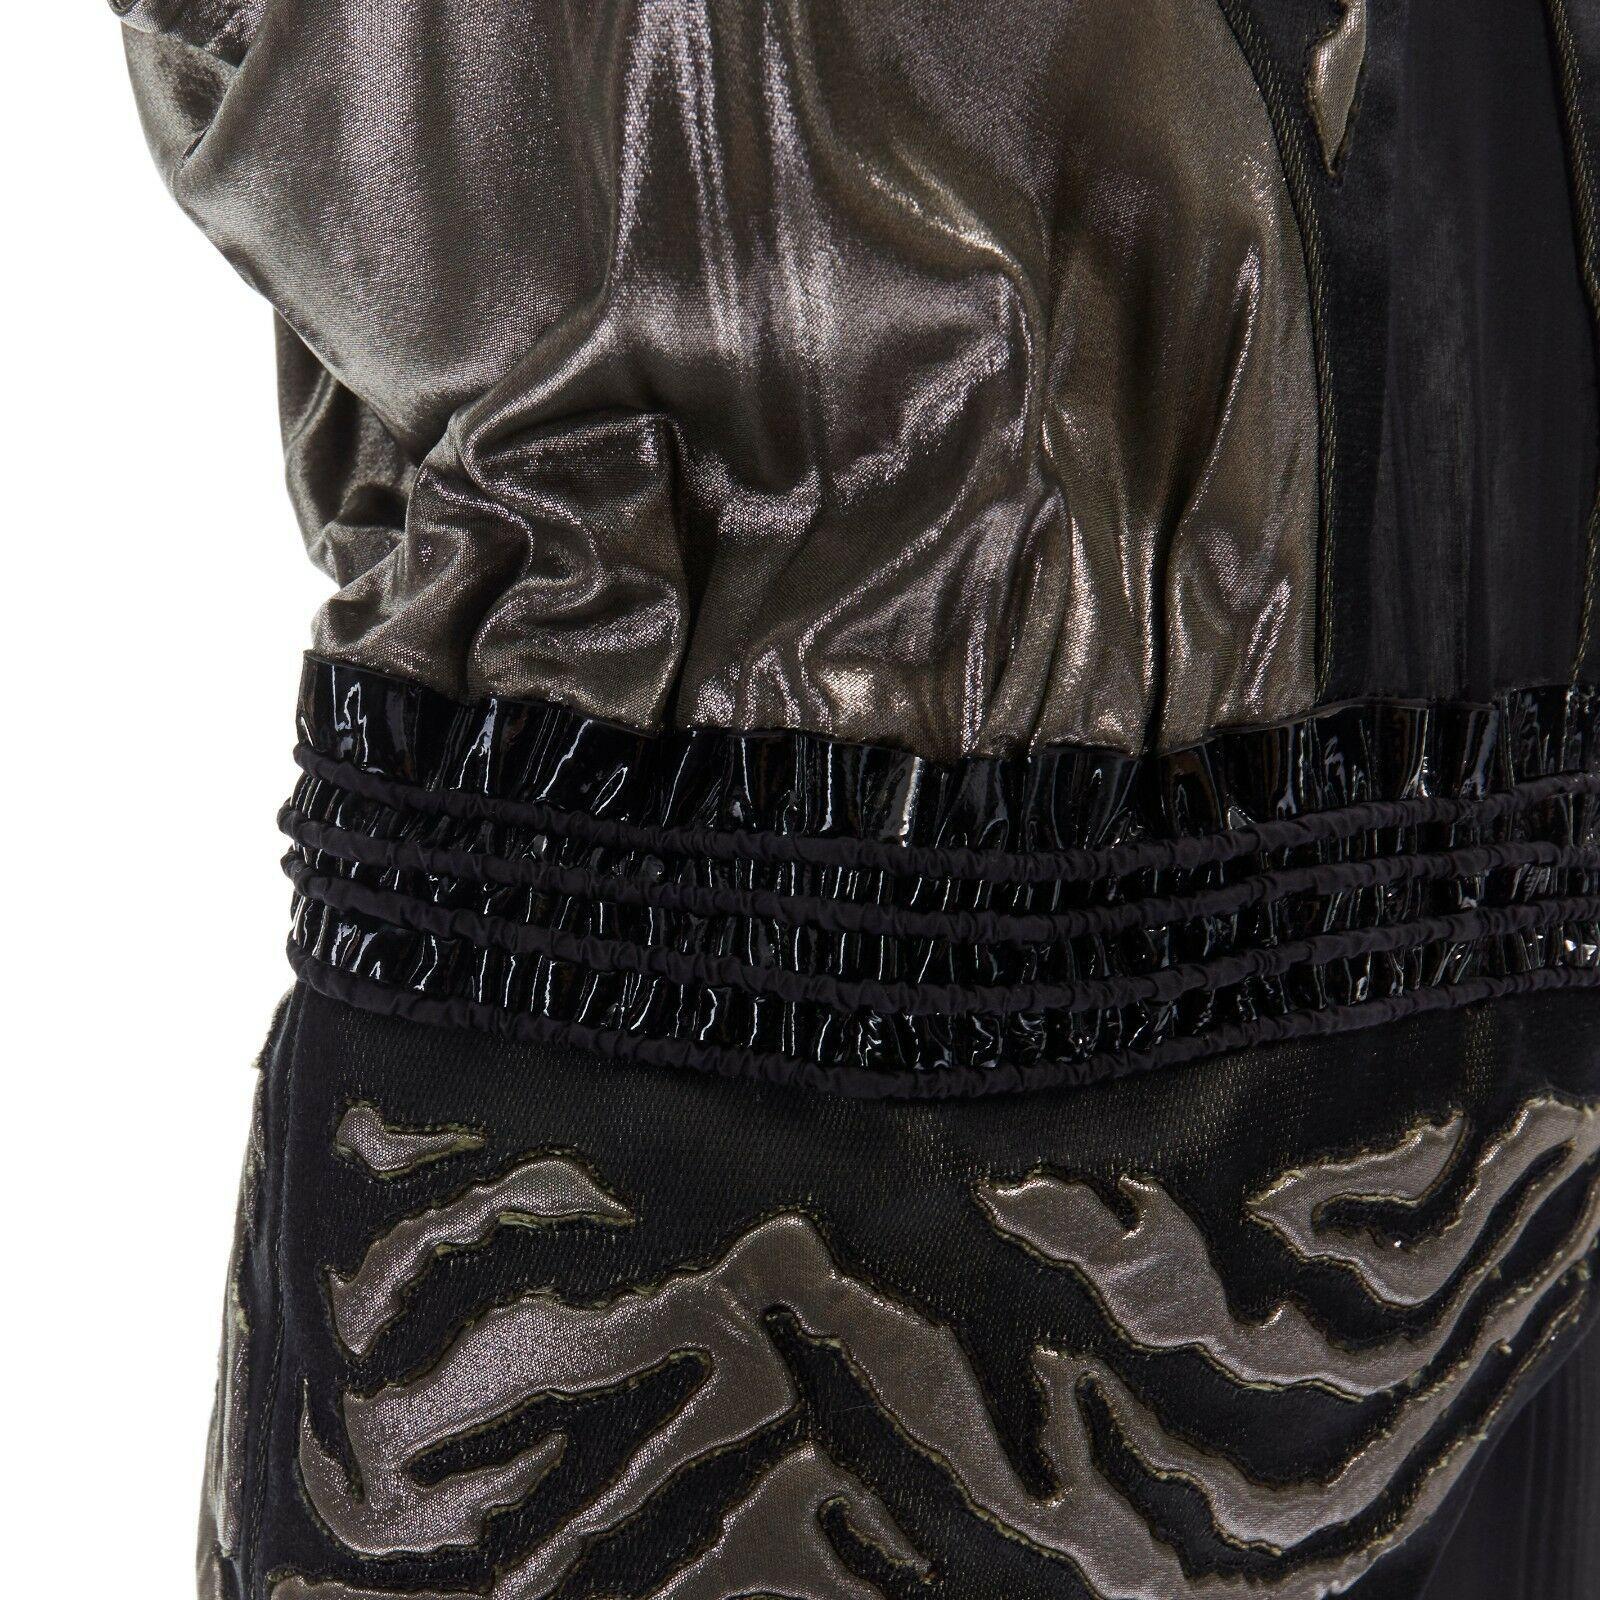 Women's runway BALENCIAGA GHESQUIERE AW12 black silver sheer layered dress FR36 US4 UK8